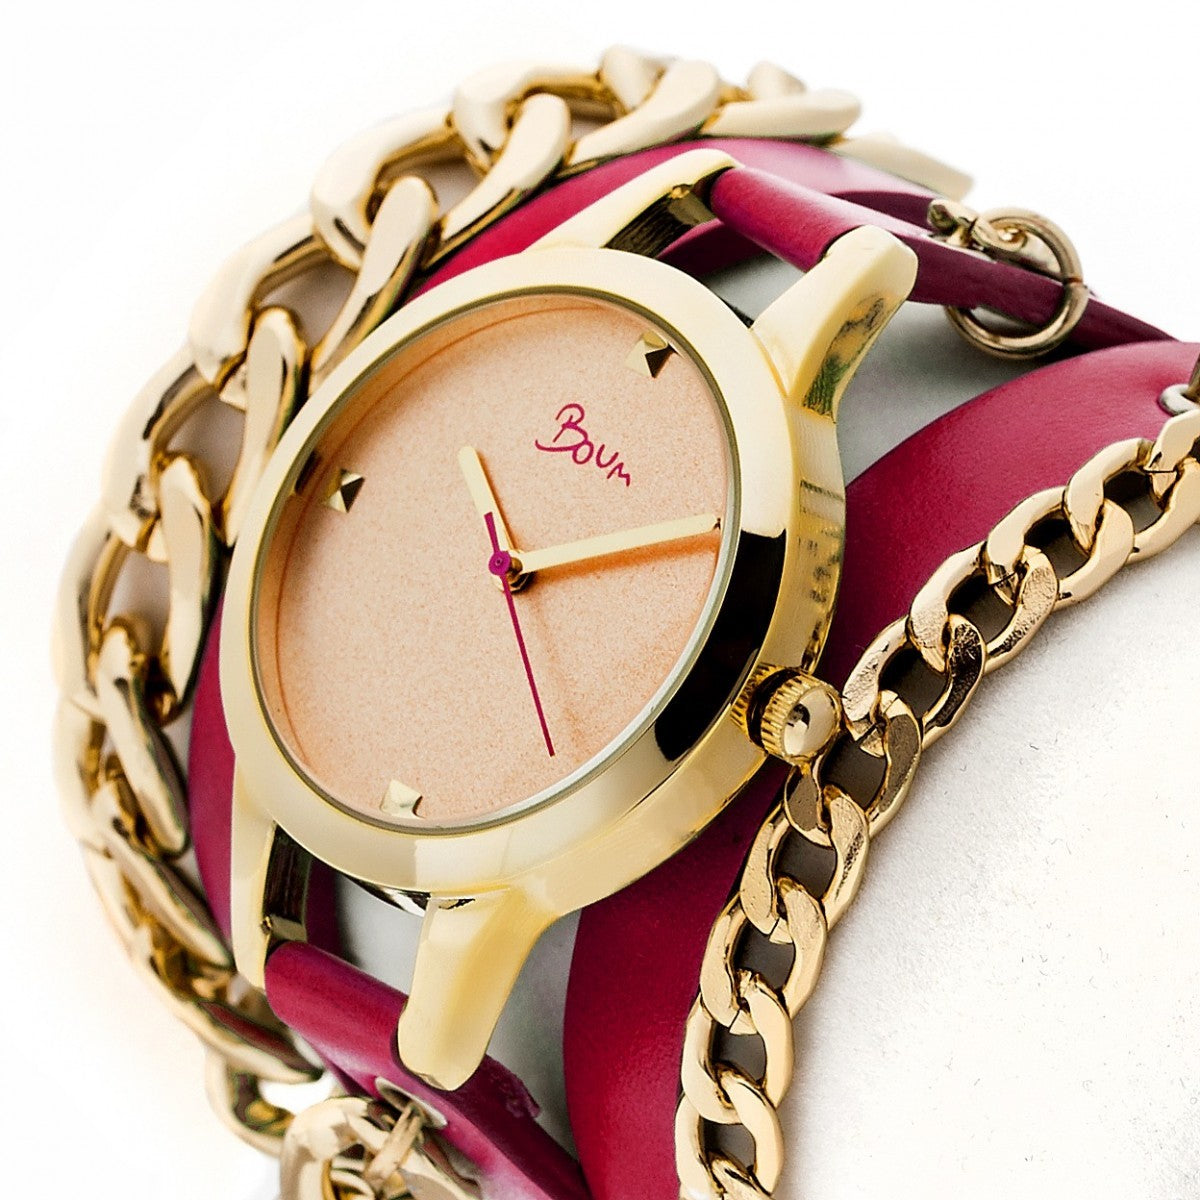 Boum Emballage Bracelet Multi-Wrap Leather-Band Watch - Gold/Pink - BOUBM3801